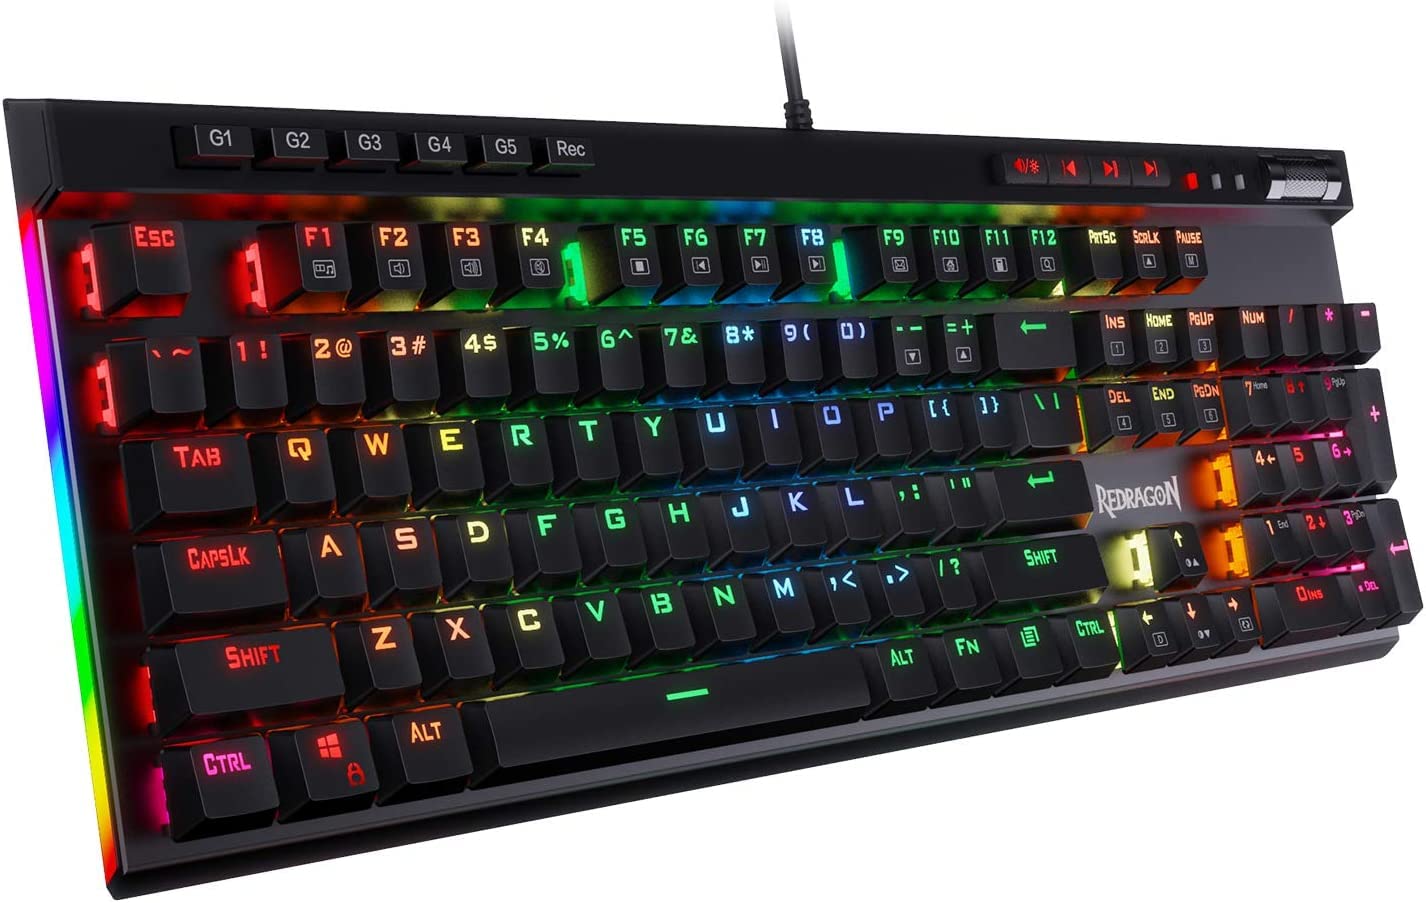 Redragon K580 VATA RGB LED Backlit Mechanical Gaming Keyboard with Macro Keys & Dedicated Media Controls, Onboard Macro Recording (Brown Switches)